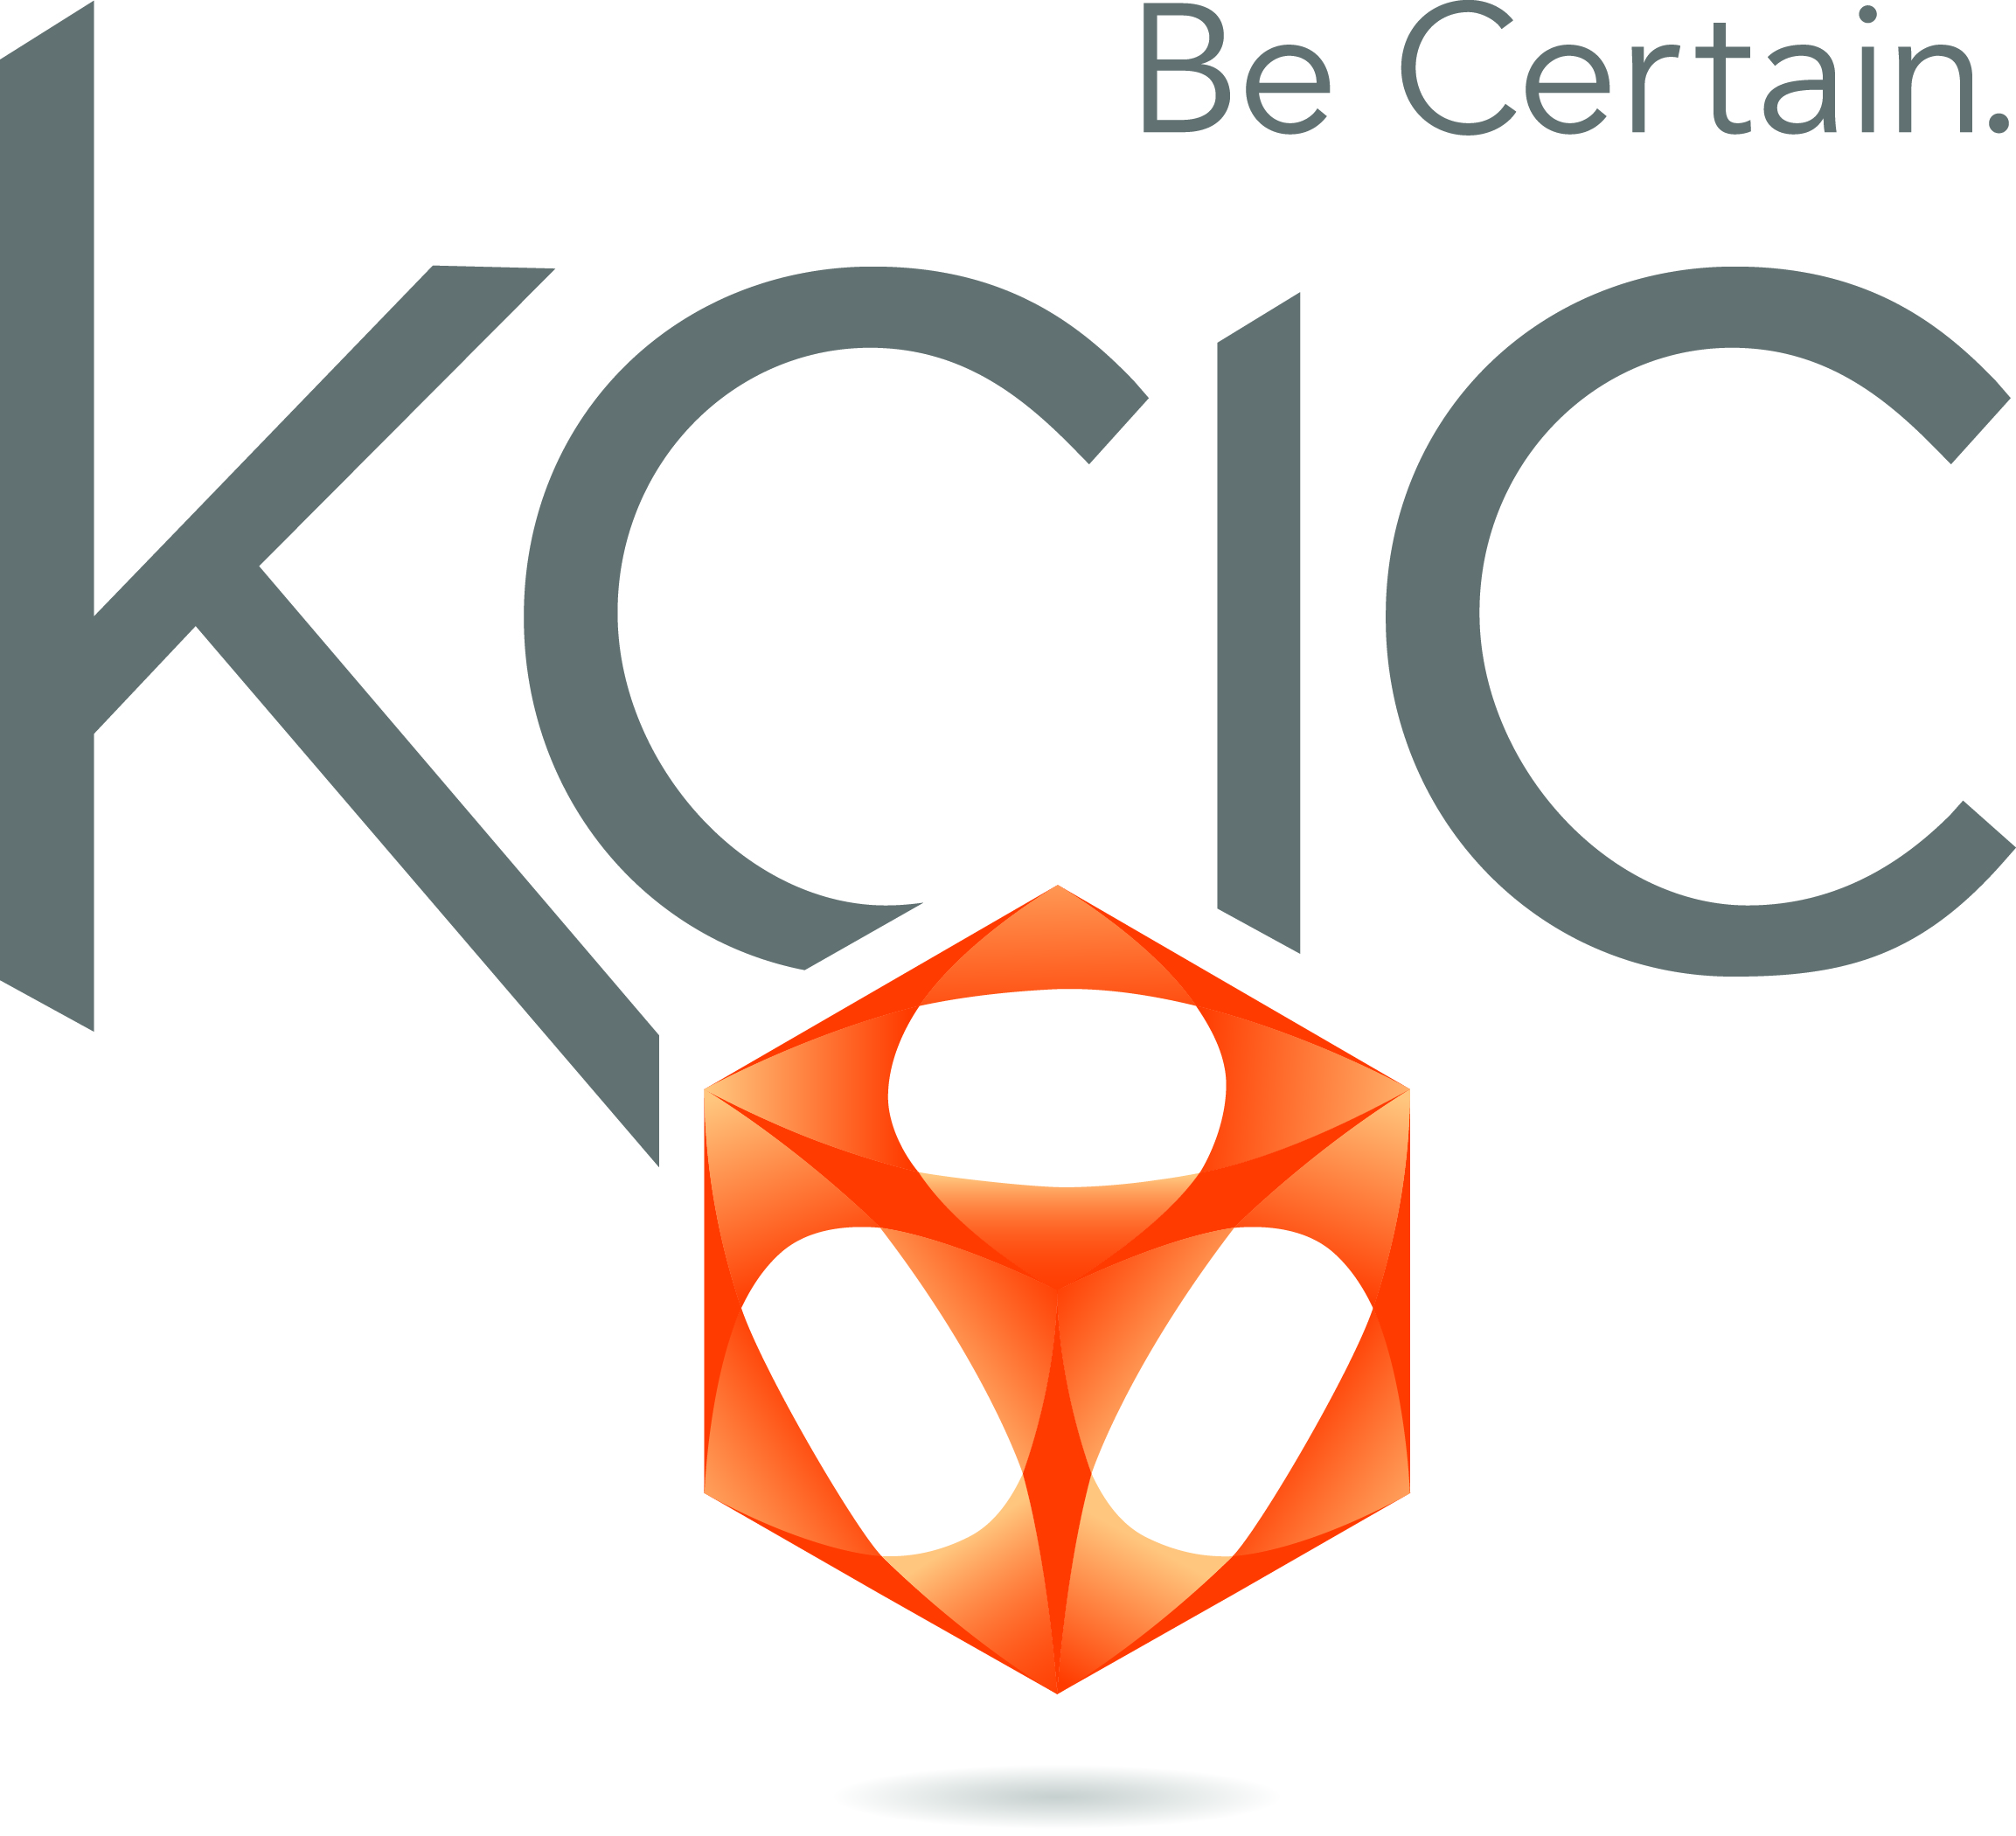 KCIC Logo